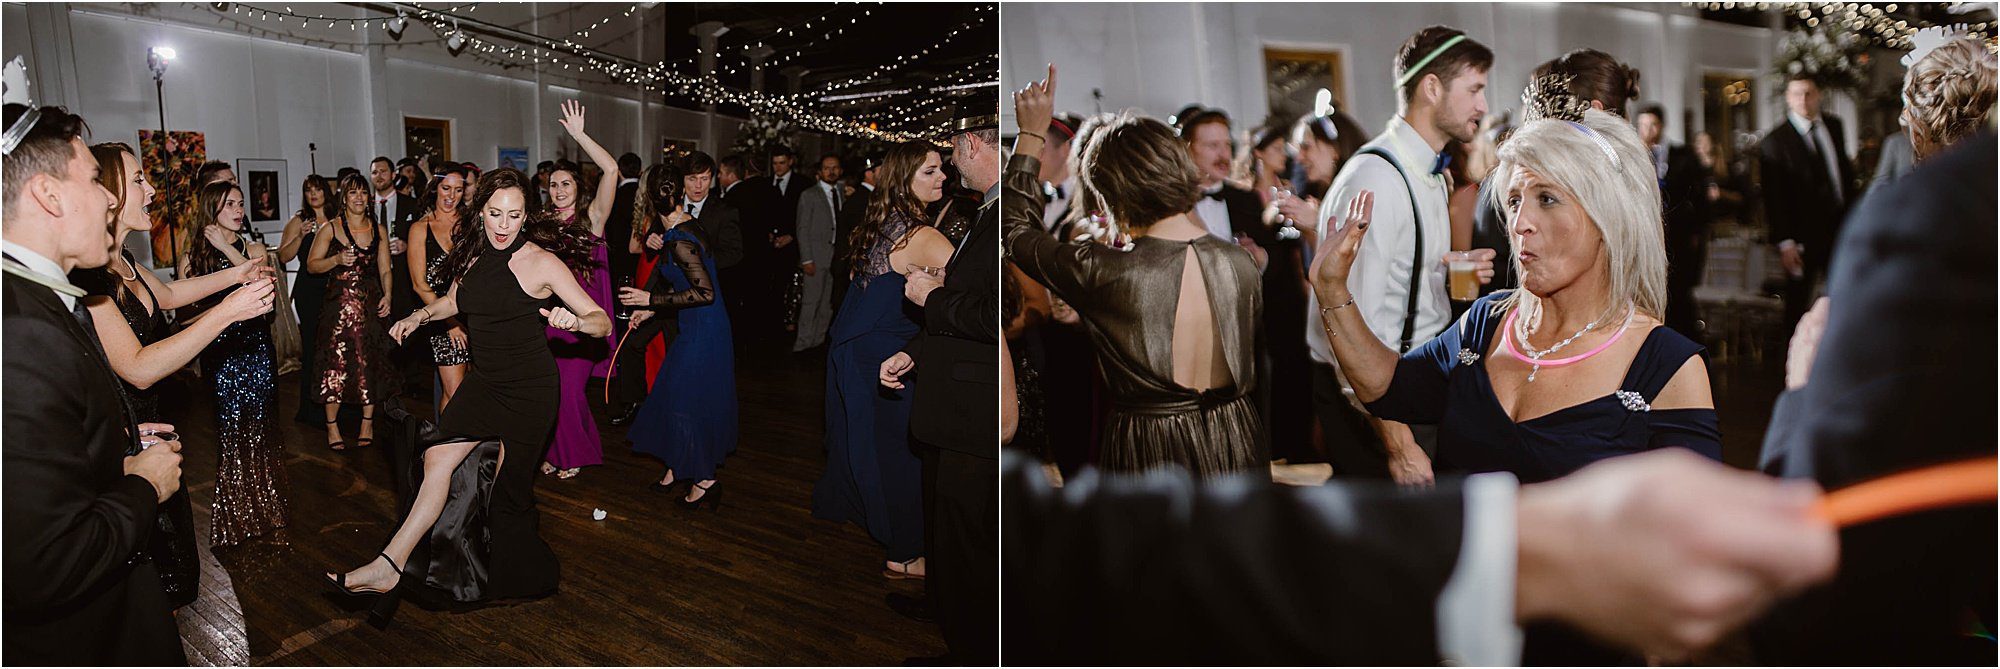 dancing photos at reception at New Year's Eve Wedding